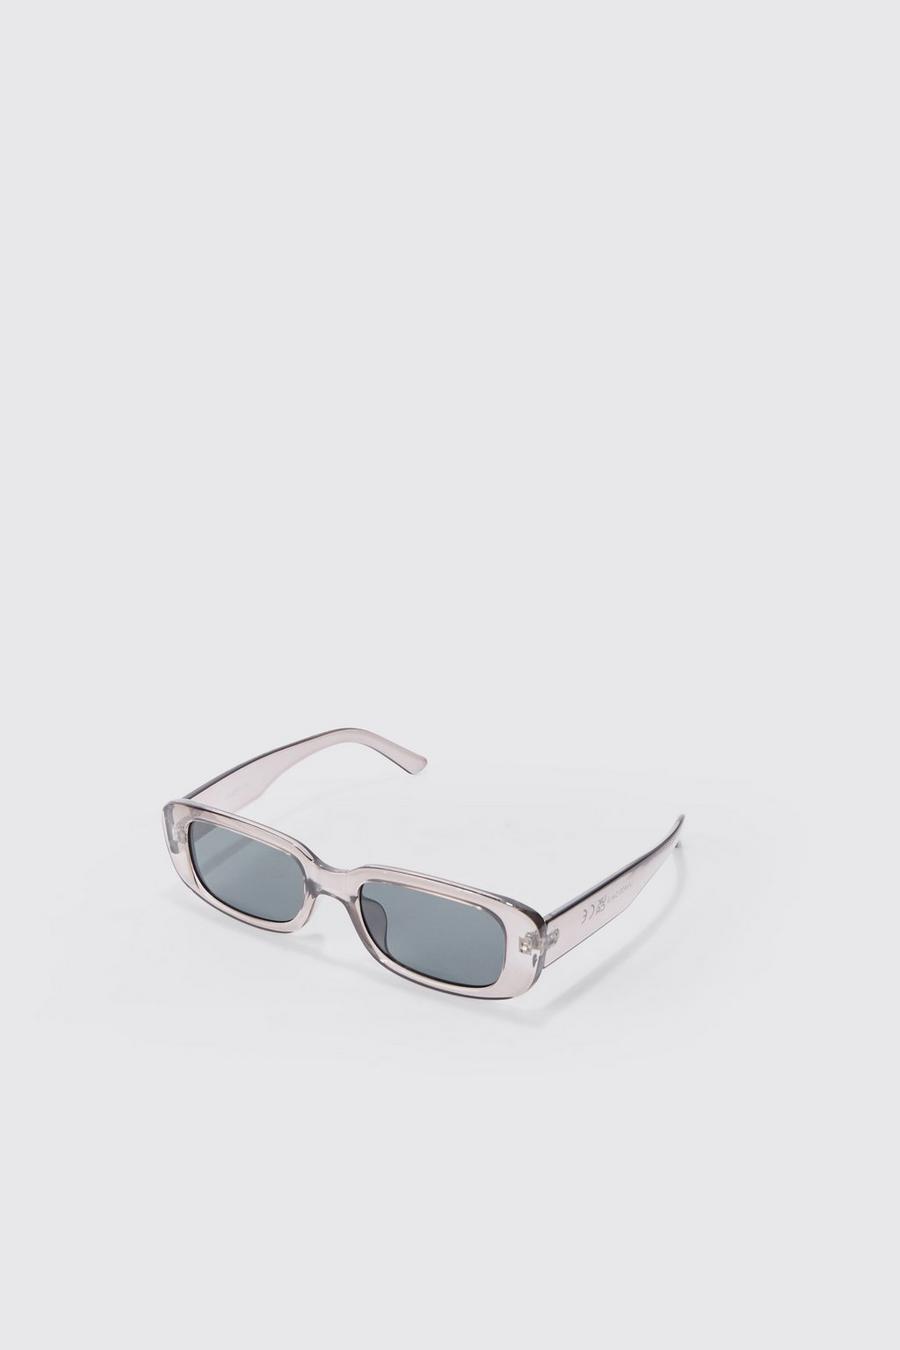 Grey Chunky solglasögon i grått glas